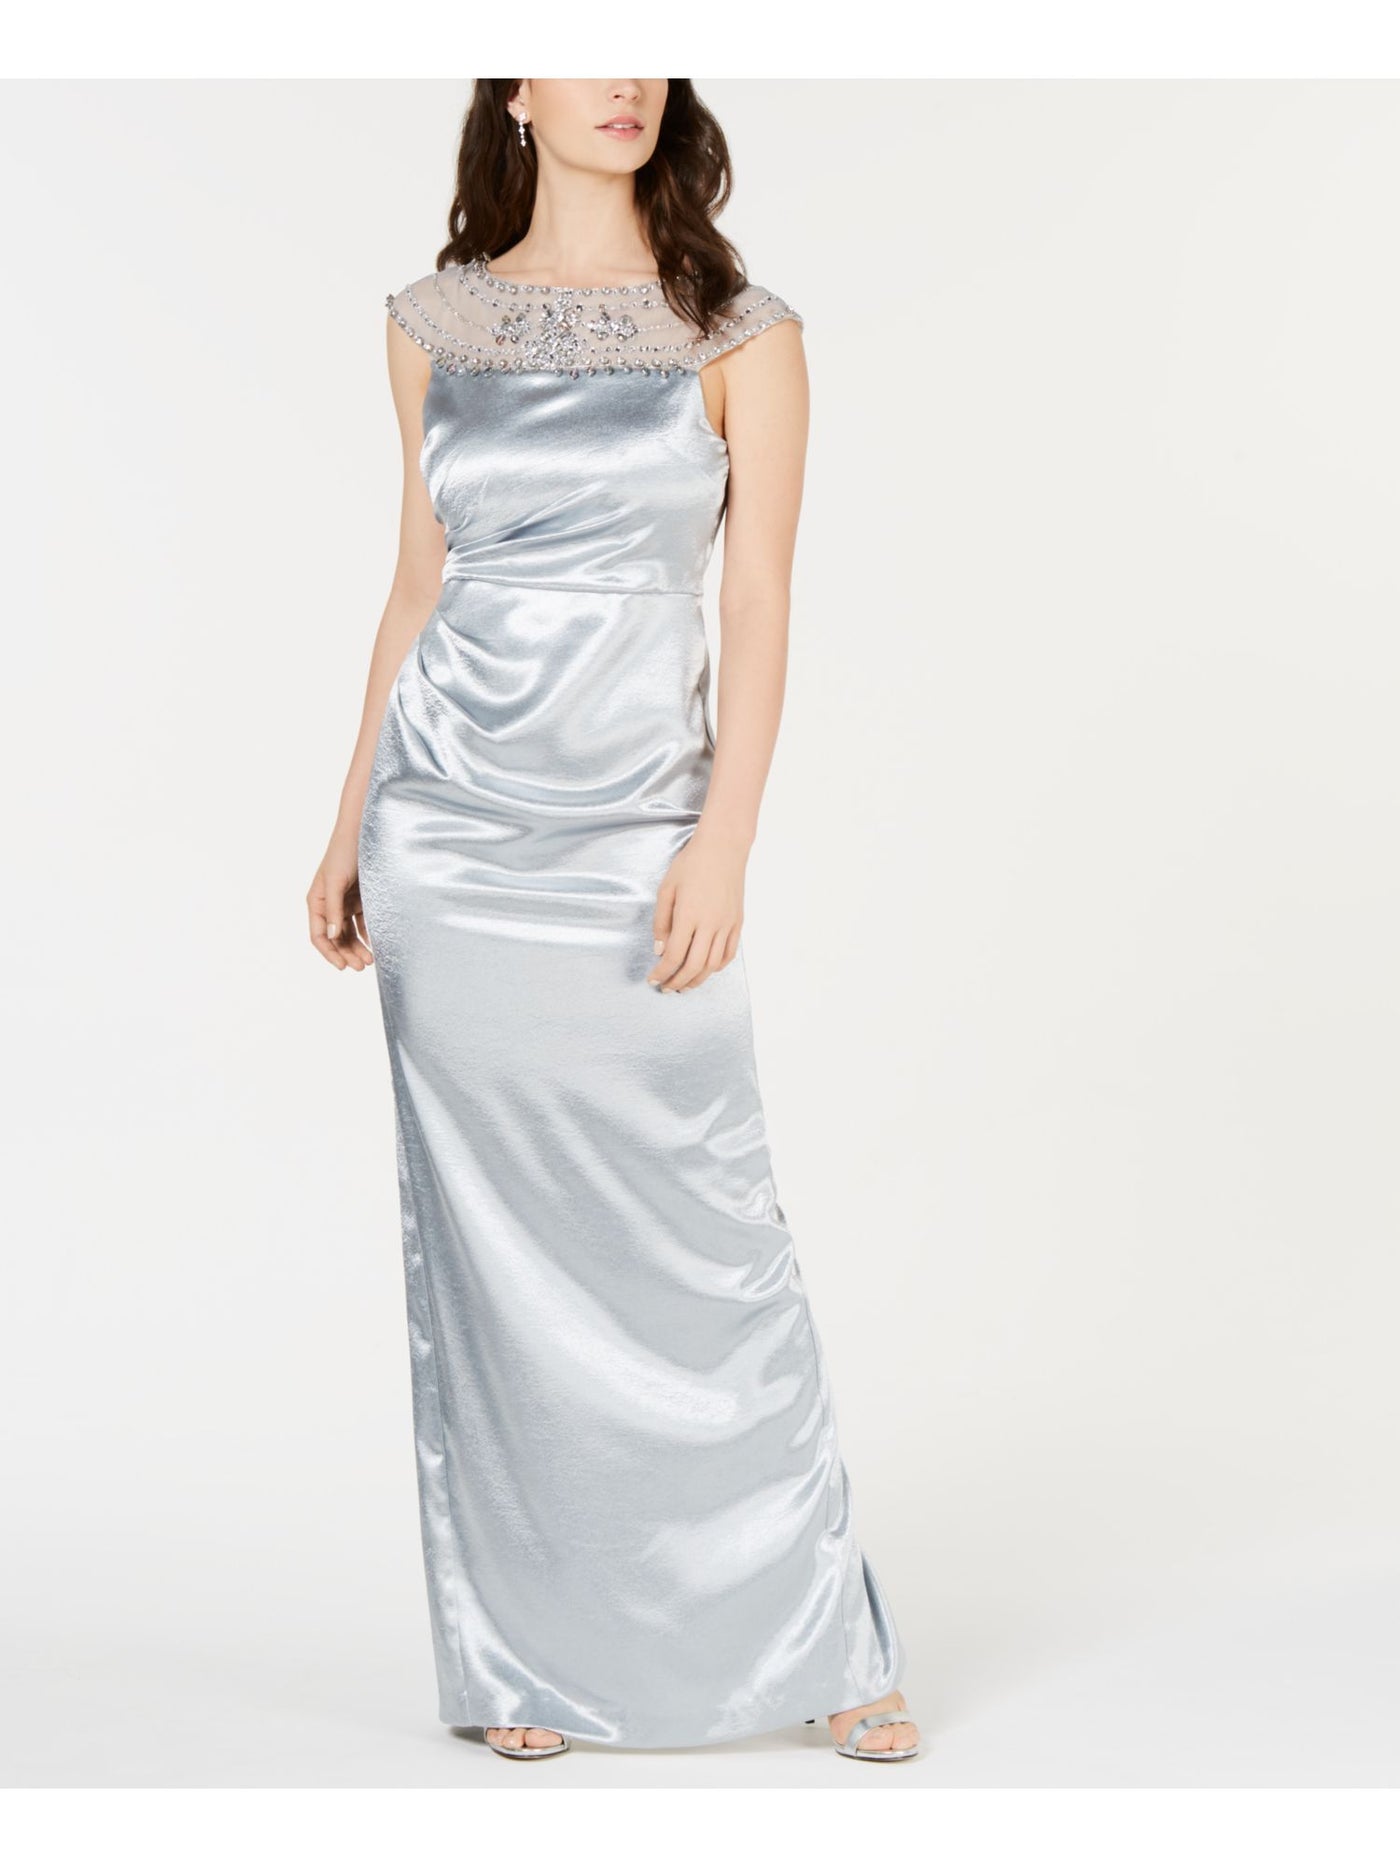 ADRIANNA PAPELL Womens Light Blue Embellished Sleeveless Illusion Neckline Full-Length Formal Dress 6